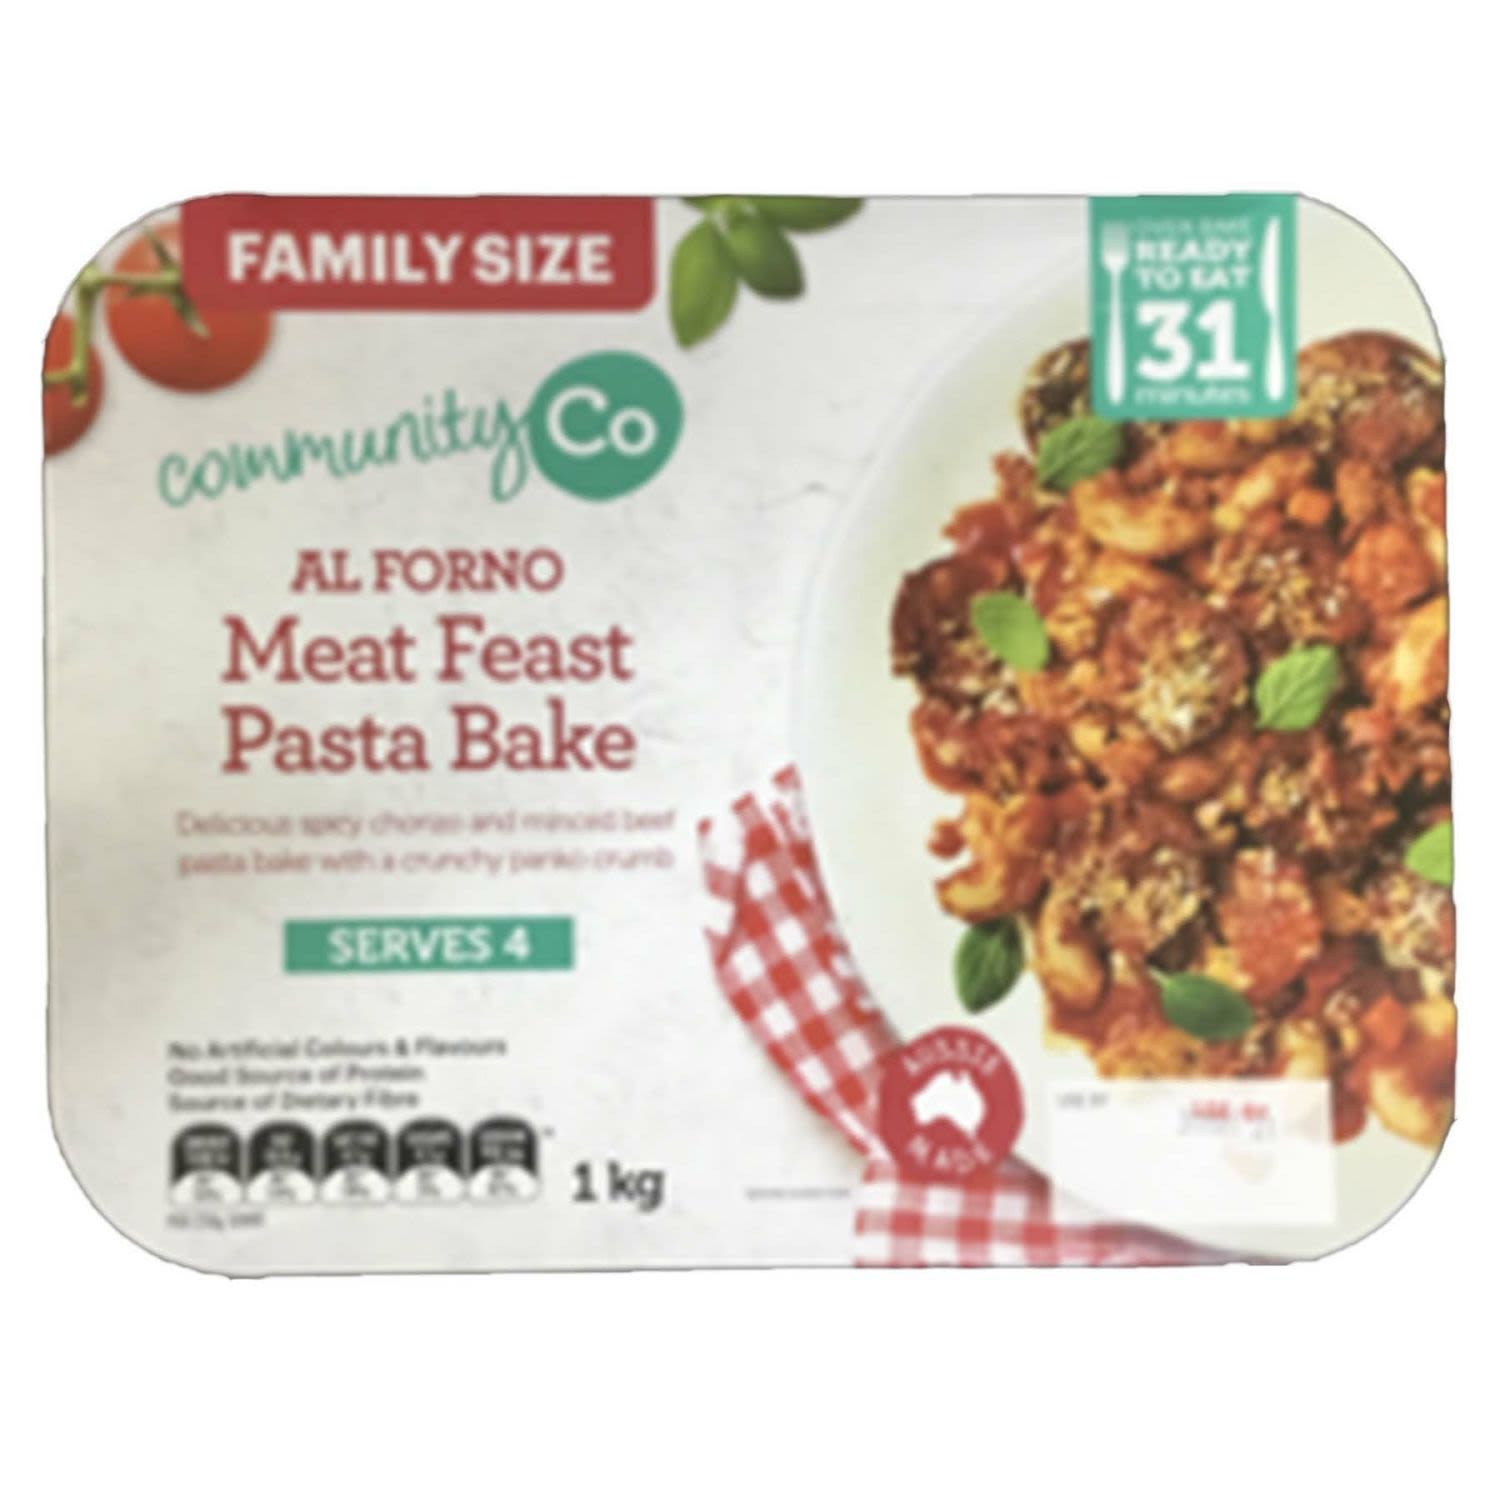 Community Co Family Size Al Forno Meat Feast Pasta Bake, 1 Kilogram